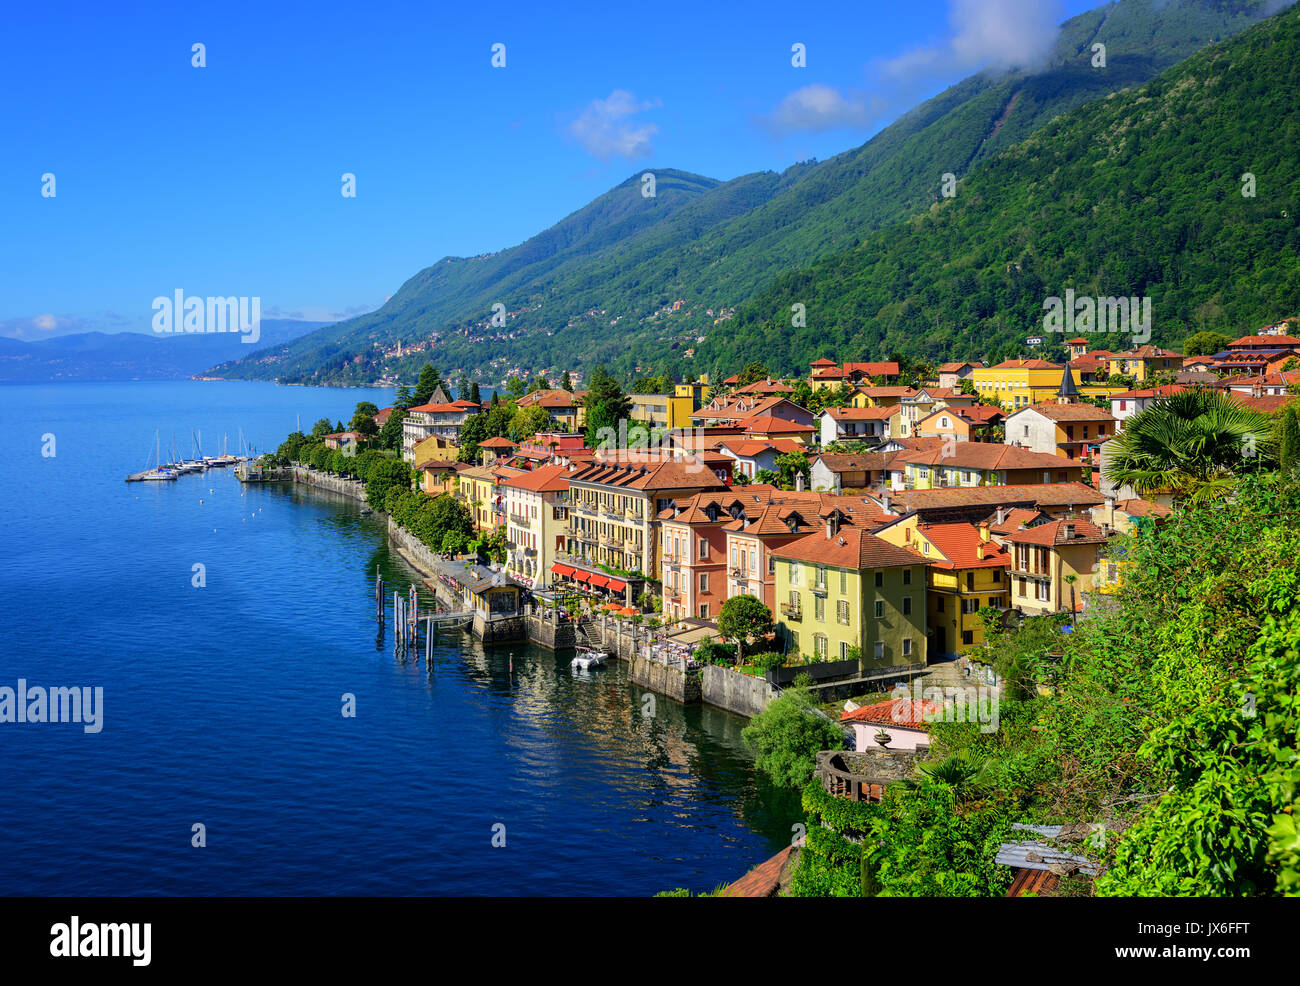 Historical tourist resort town Cannero Riviera on Lago Maggiore lake, Alps mountains, Italy Stock Photo